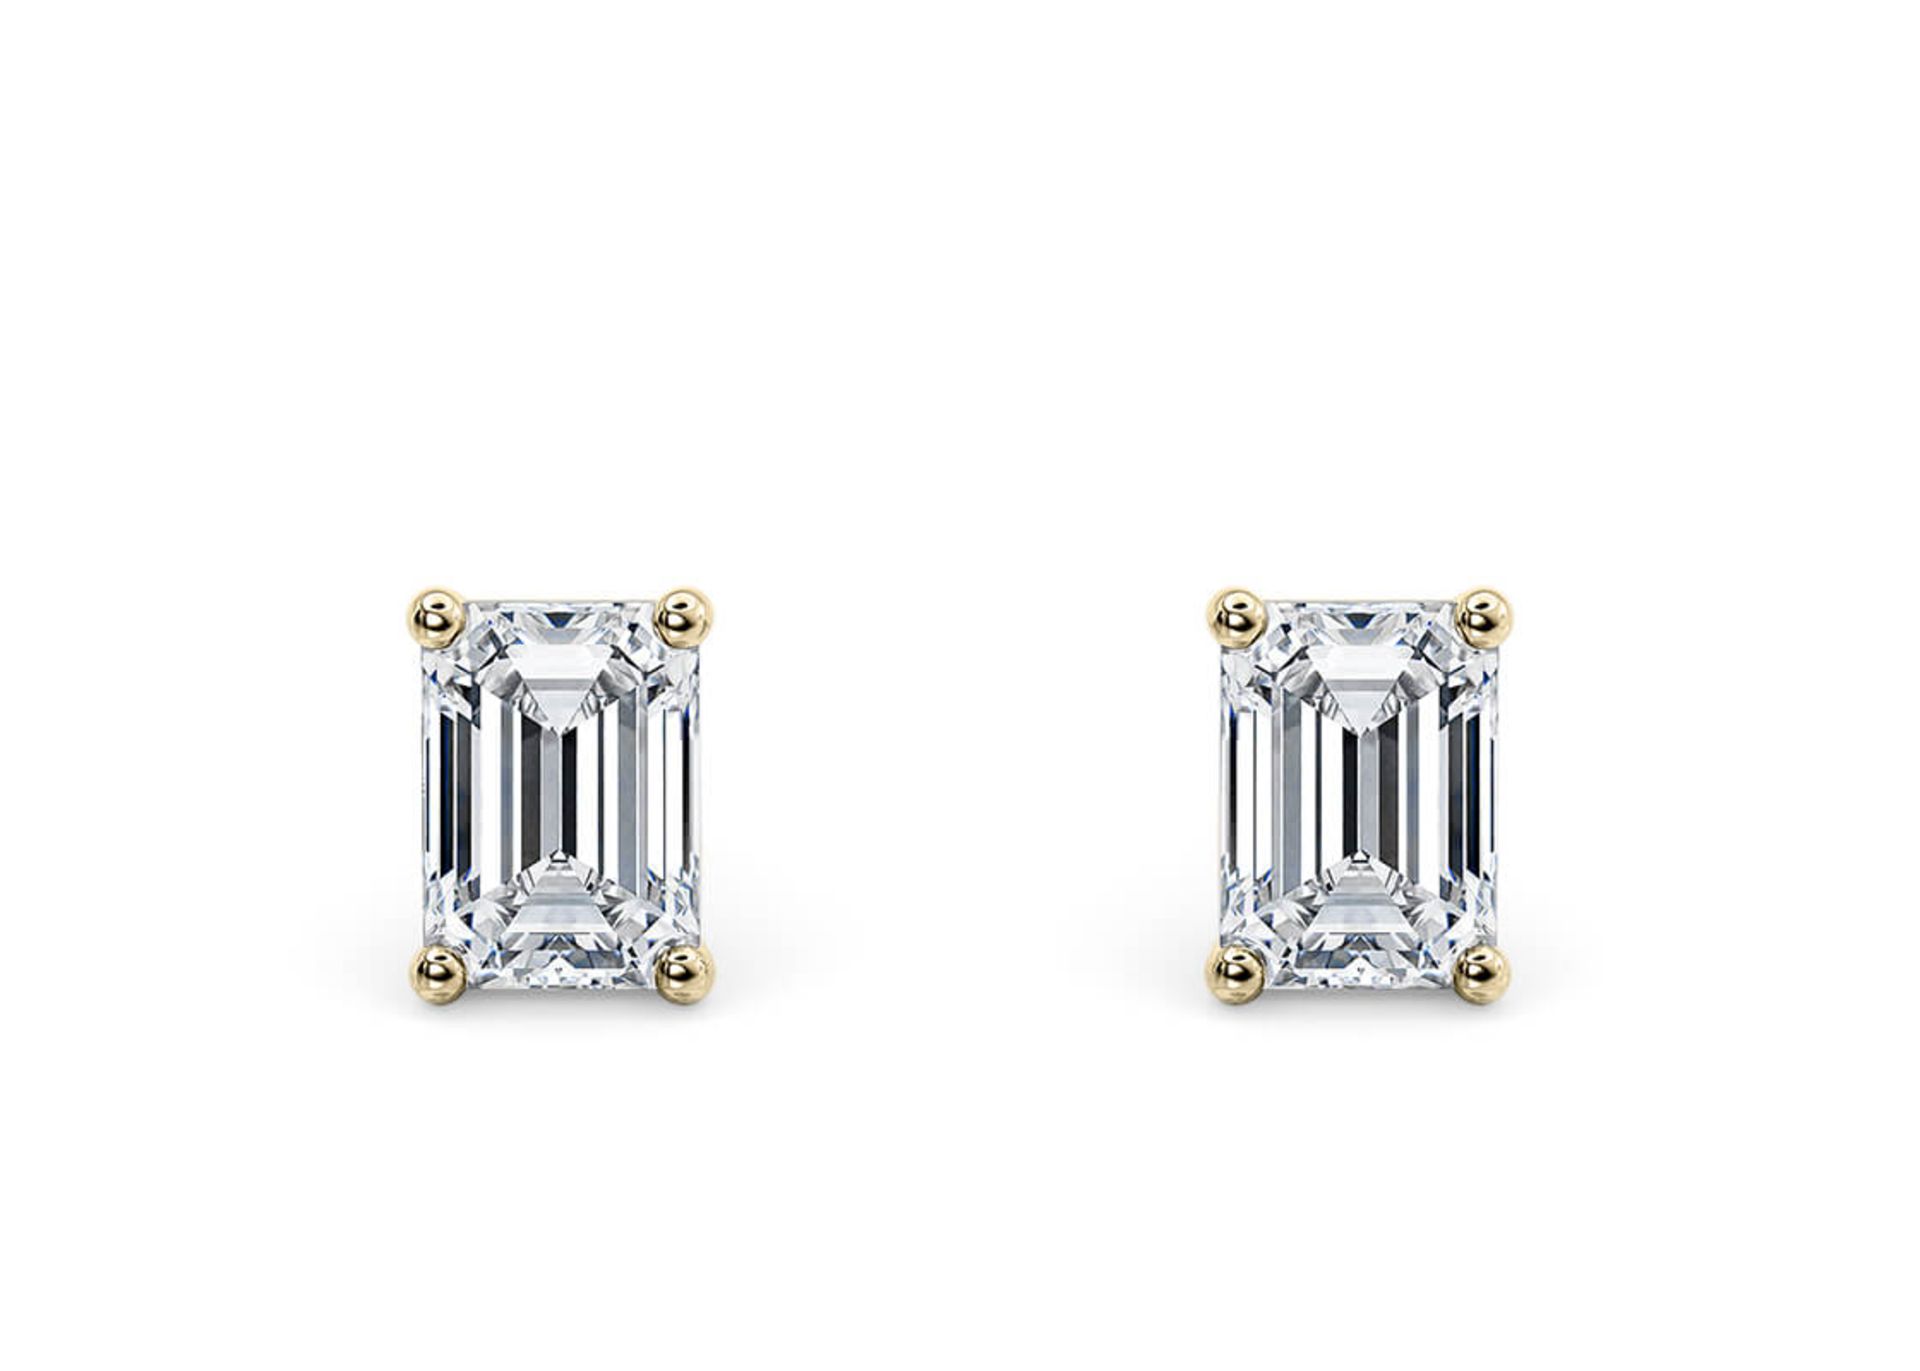 Emerald Cut 2.00 Carat Natural Diamond Earrings 18kt Yellow Gold - Colour E - VS Clarity- GIA